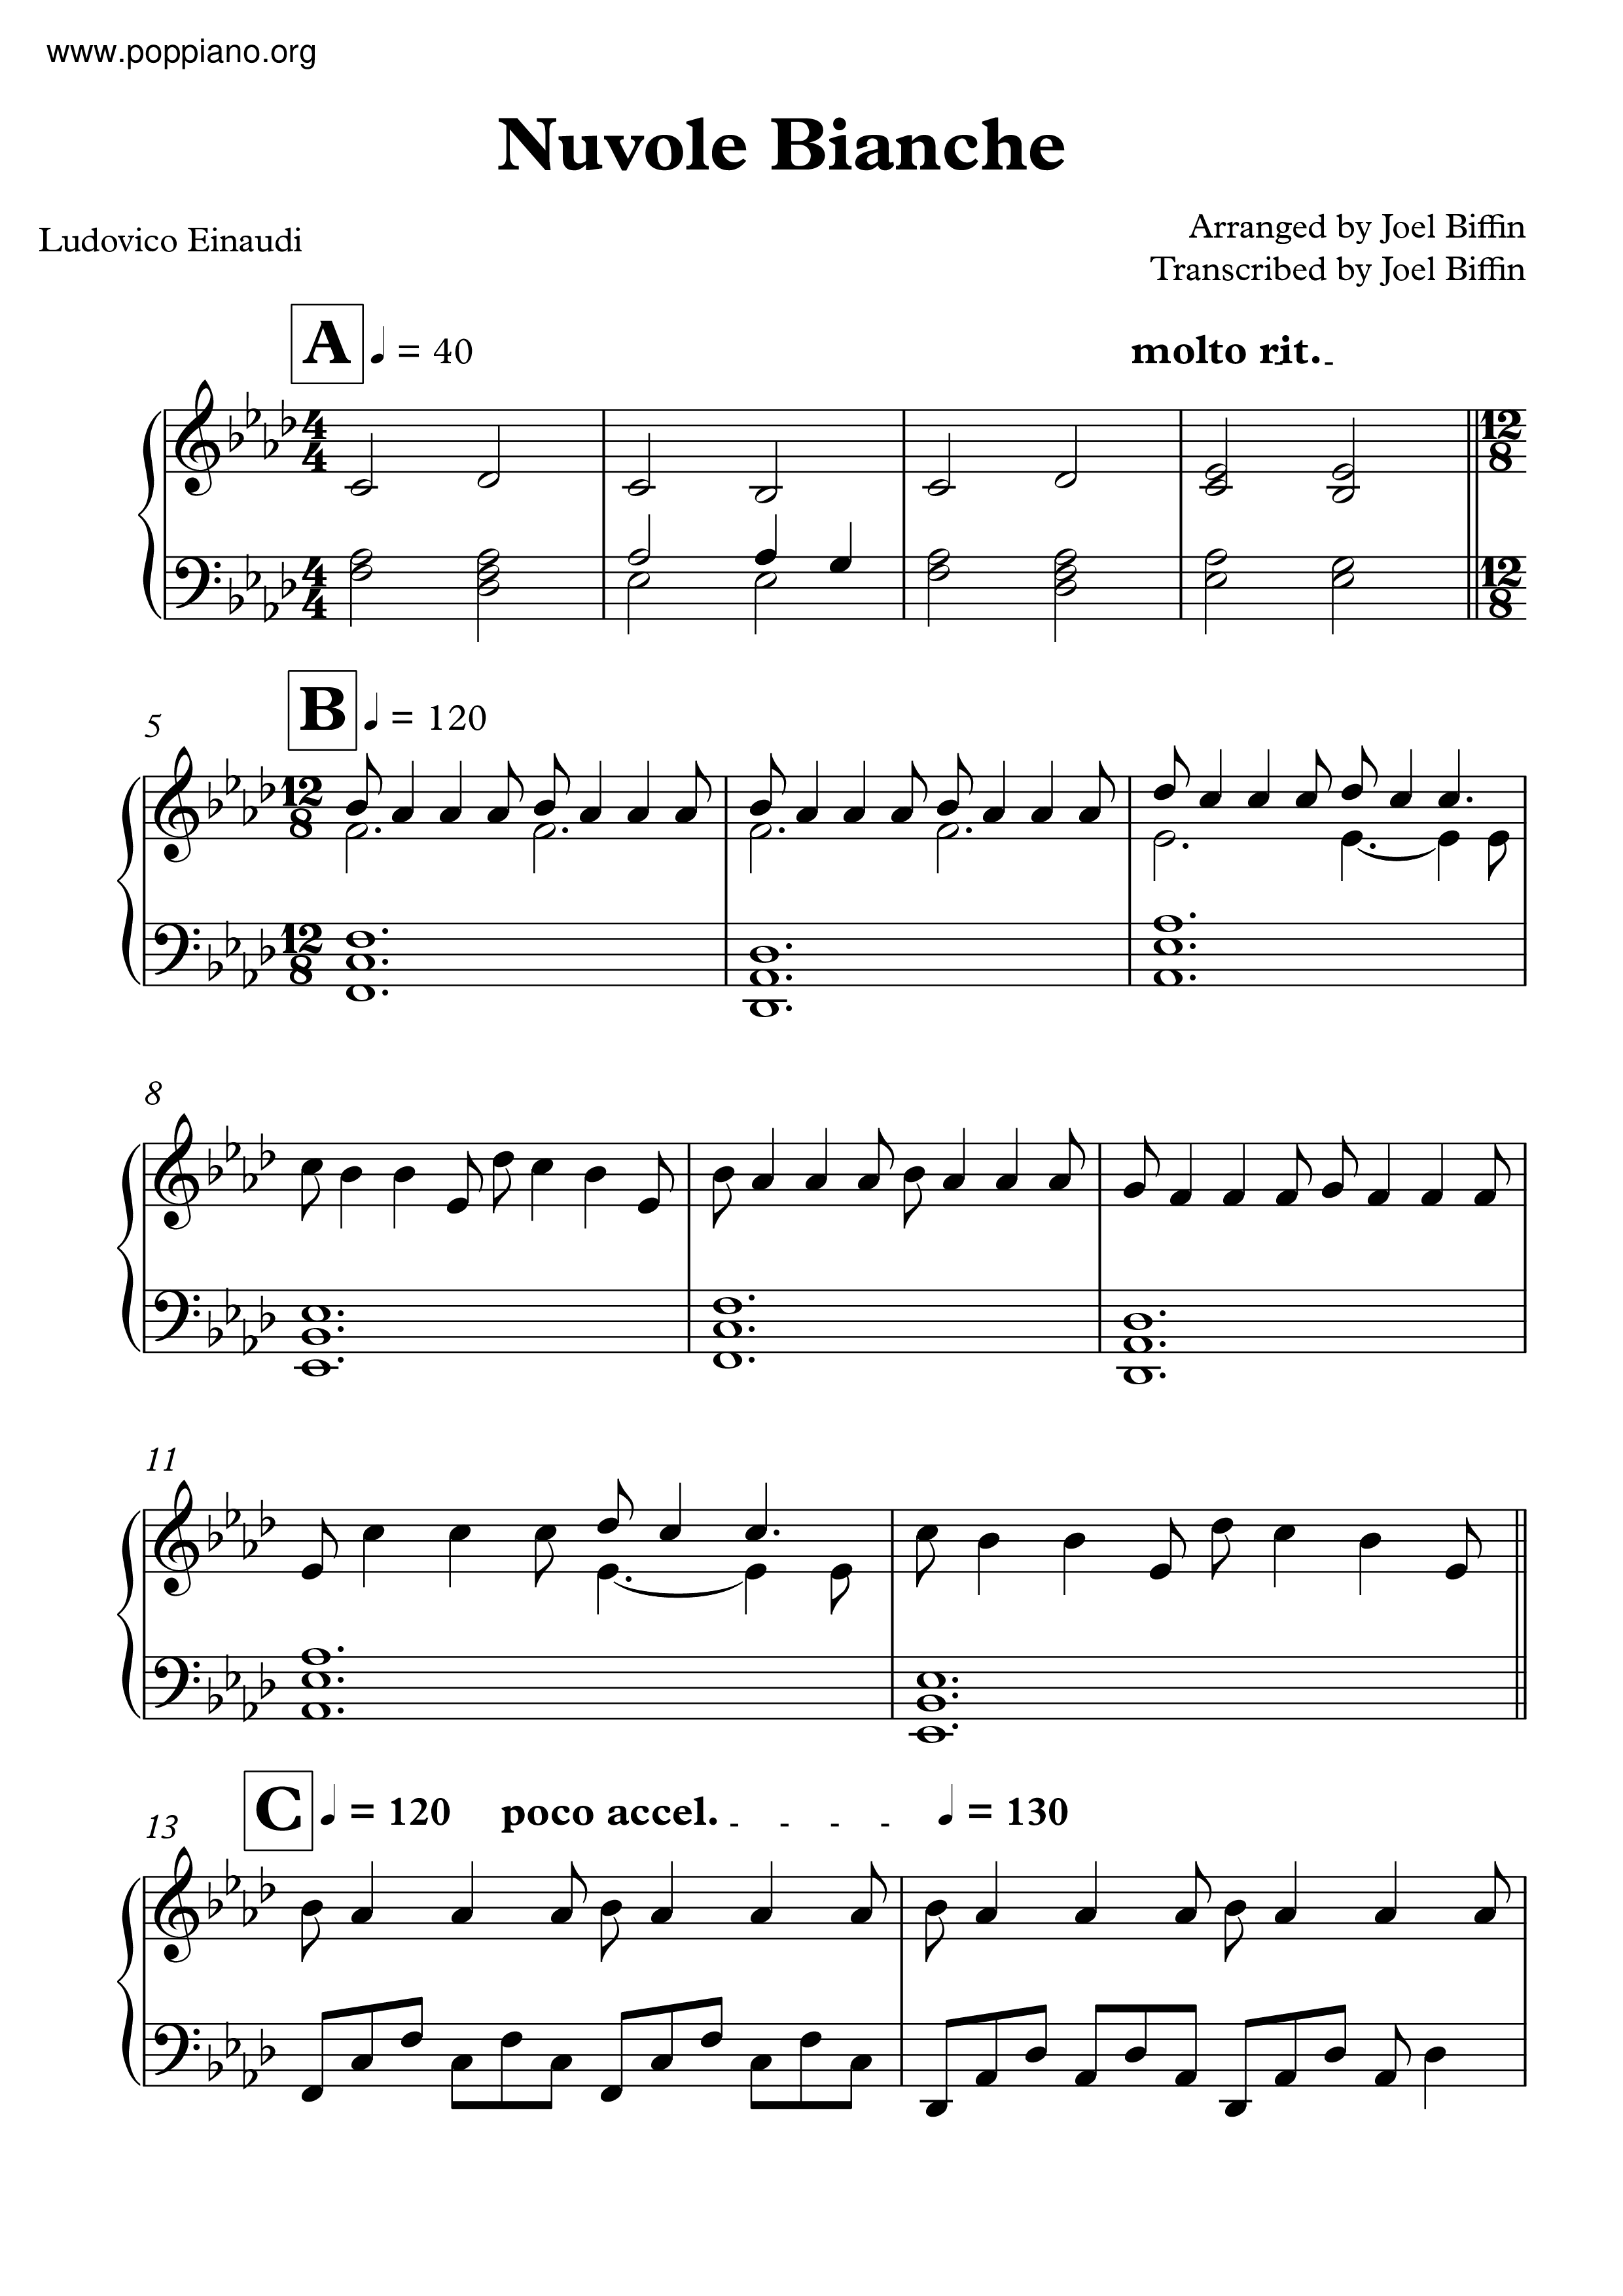 Ludovico Einaudi Nuvole Bianche Sheet Music Pdf Free Score Download Piano tutorial (synthesia) for learning the song nuvole bianche by ludovico einaudi. ludovico einaudi nuvole bianche sheet